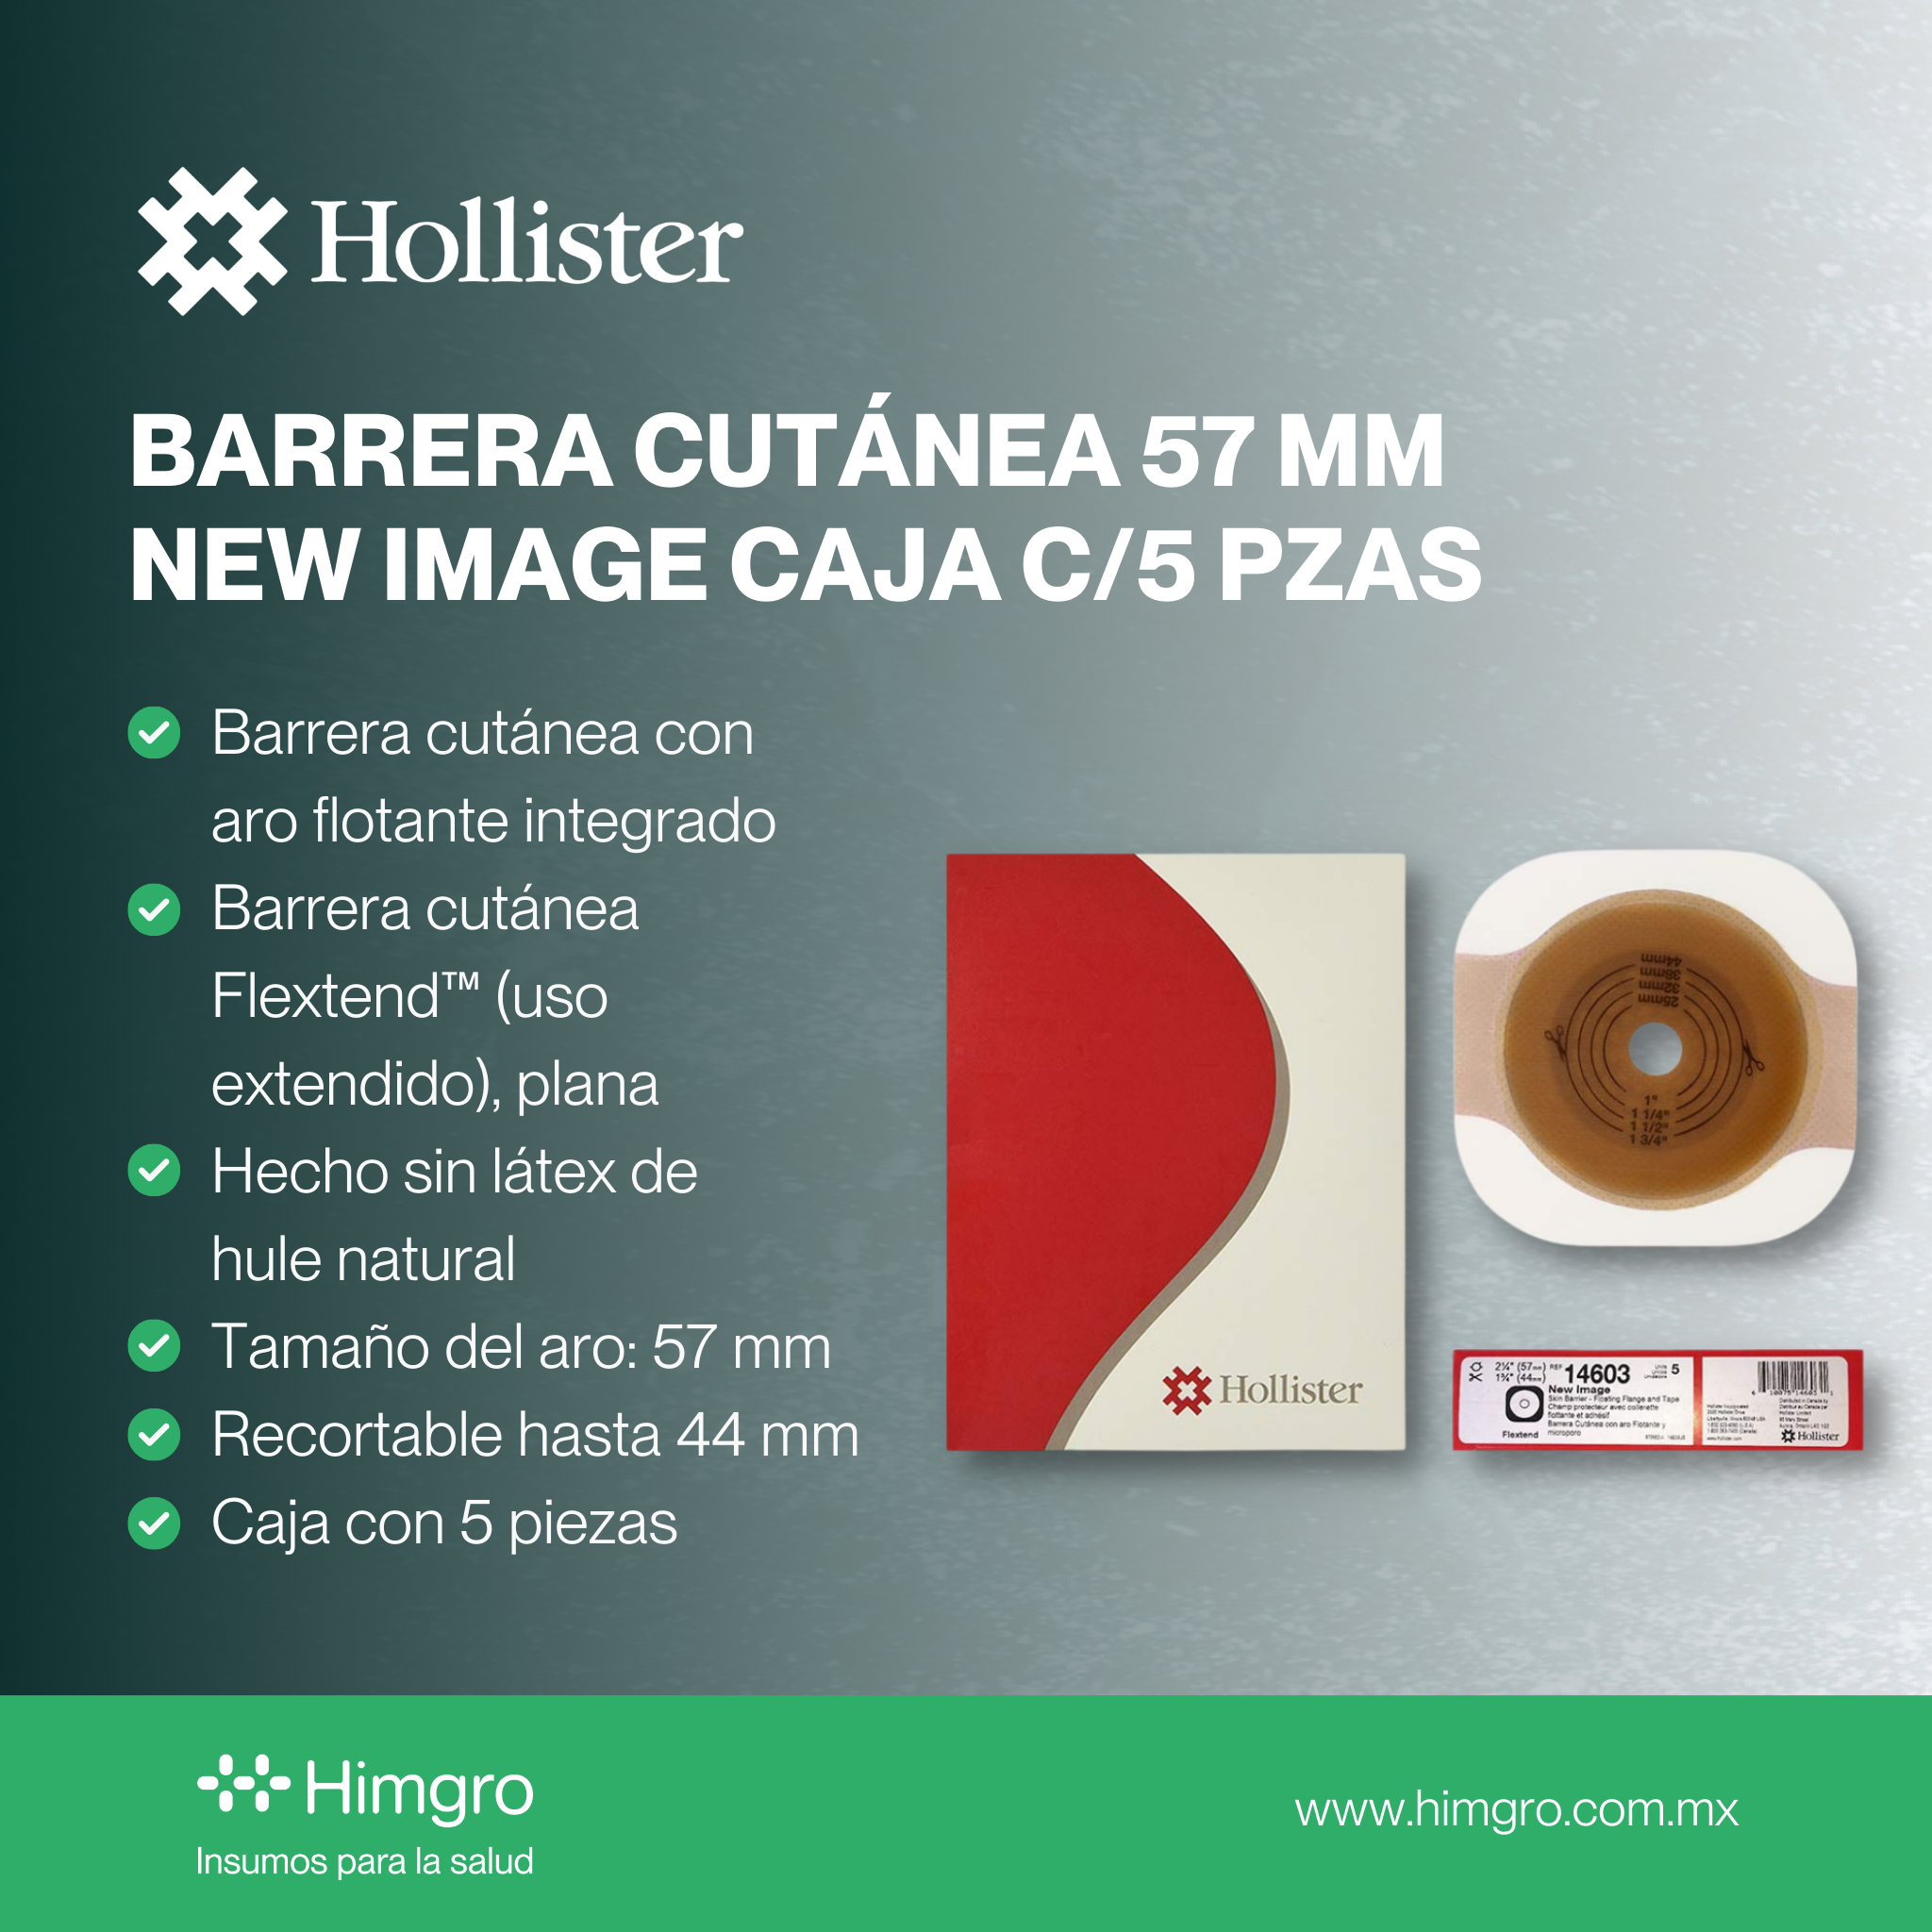 Barrera cutánea 57 mm New Image caja c/5 pzas